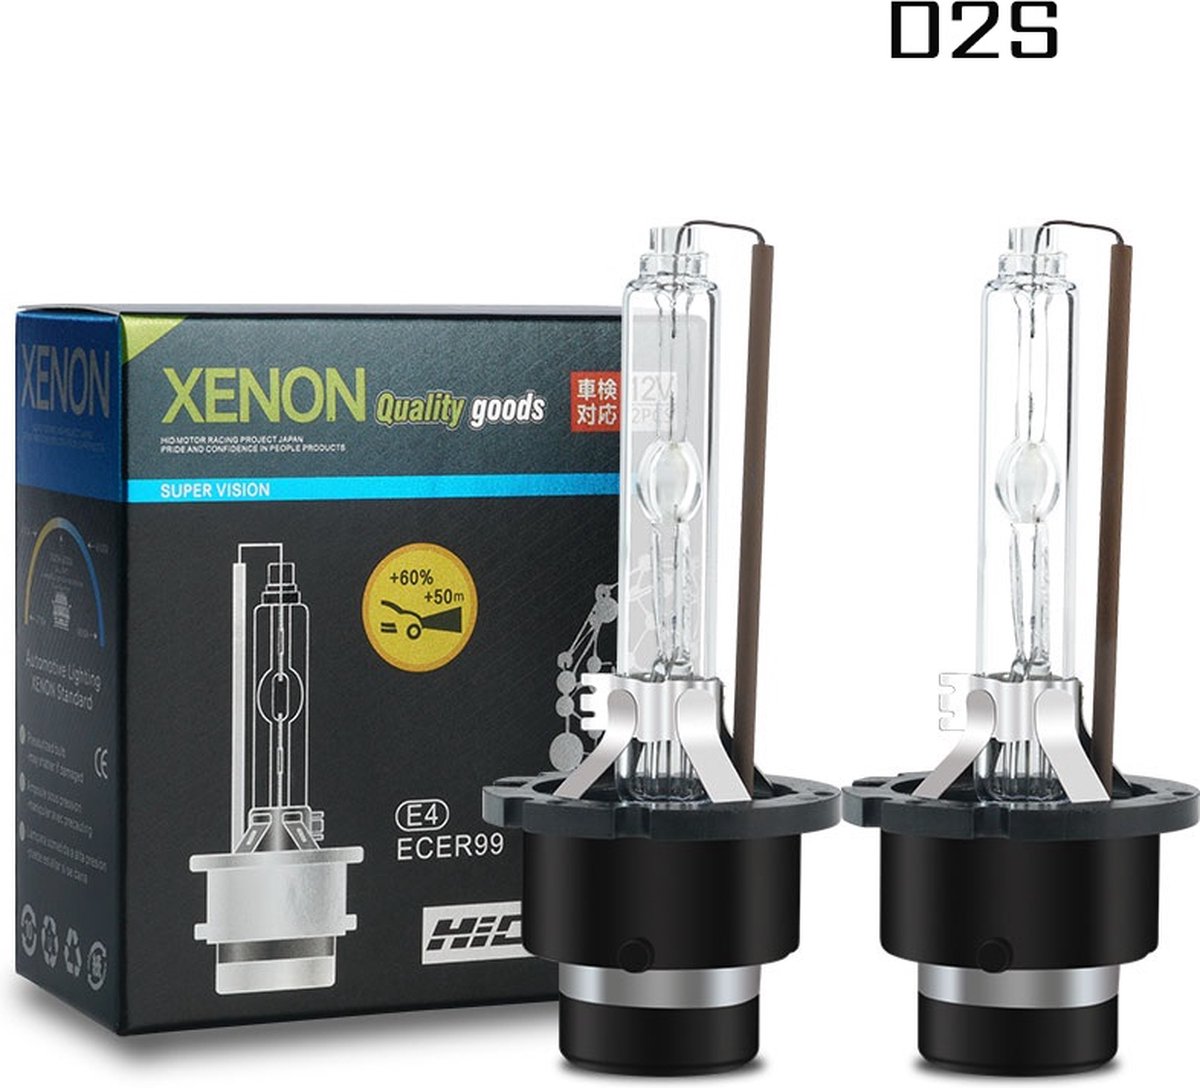 TLVX D2S 35W 12V Origineel Xenon Lampen 10.000K (2 stuks) / Blauw licht / HID lampen / 35W / Xenon bulbs / Dimlicht / Grootlicht / Hoge Lichtopbrengst / Xenon Koplampen / Auto Lamp / CANBUS / Autolampen / Origineel D2S Xenon (2 stuks)